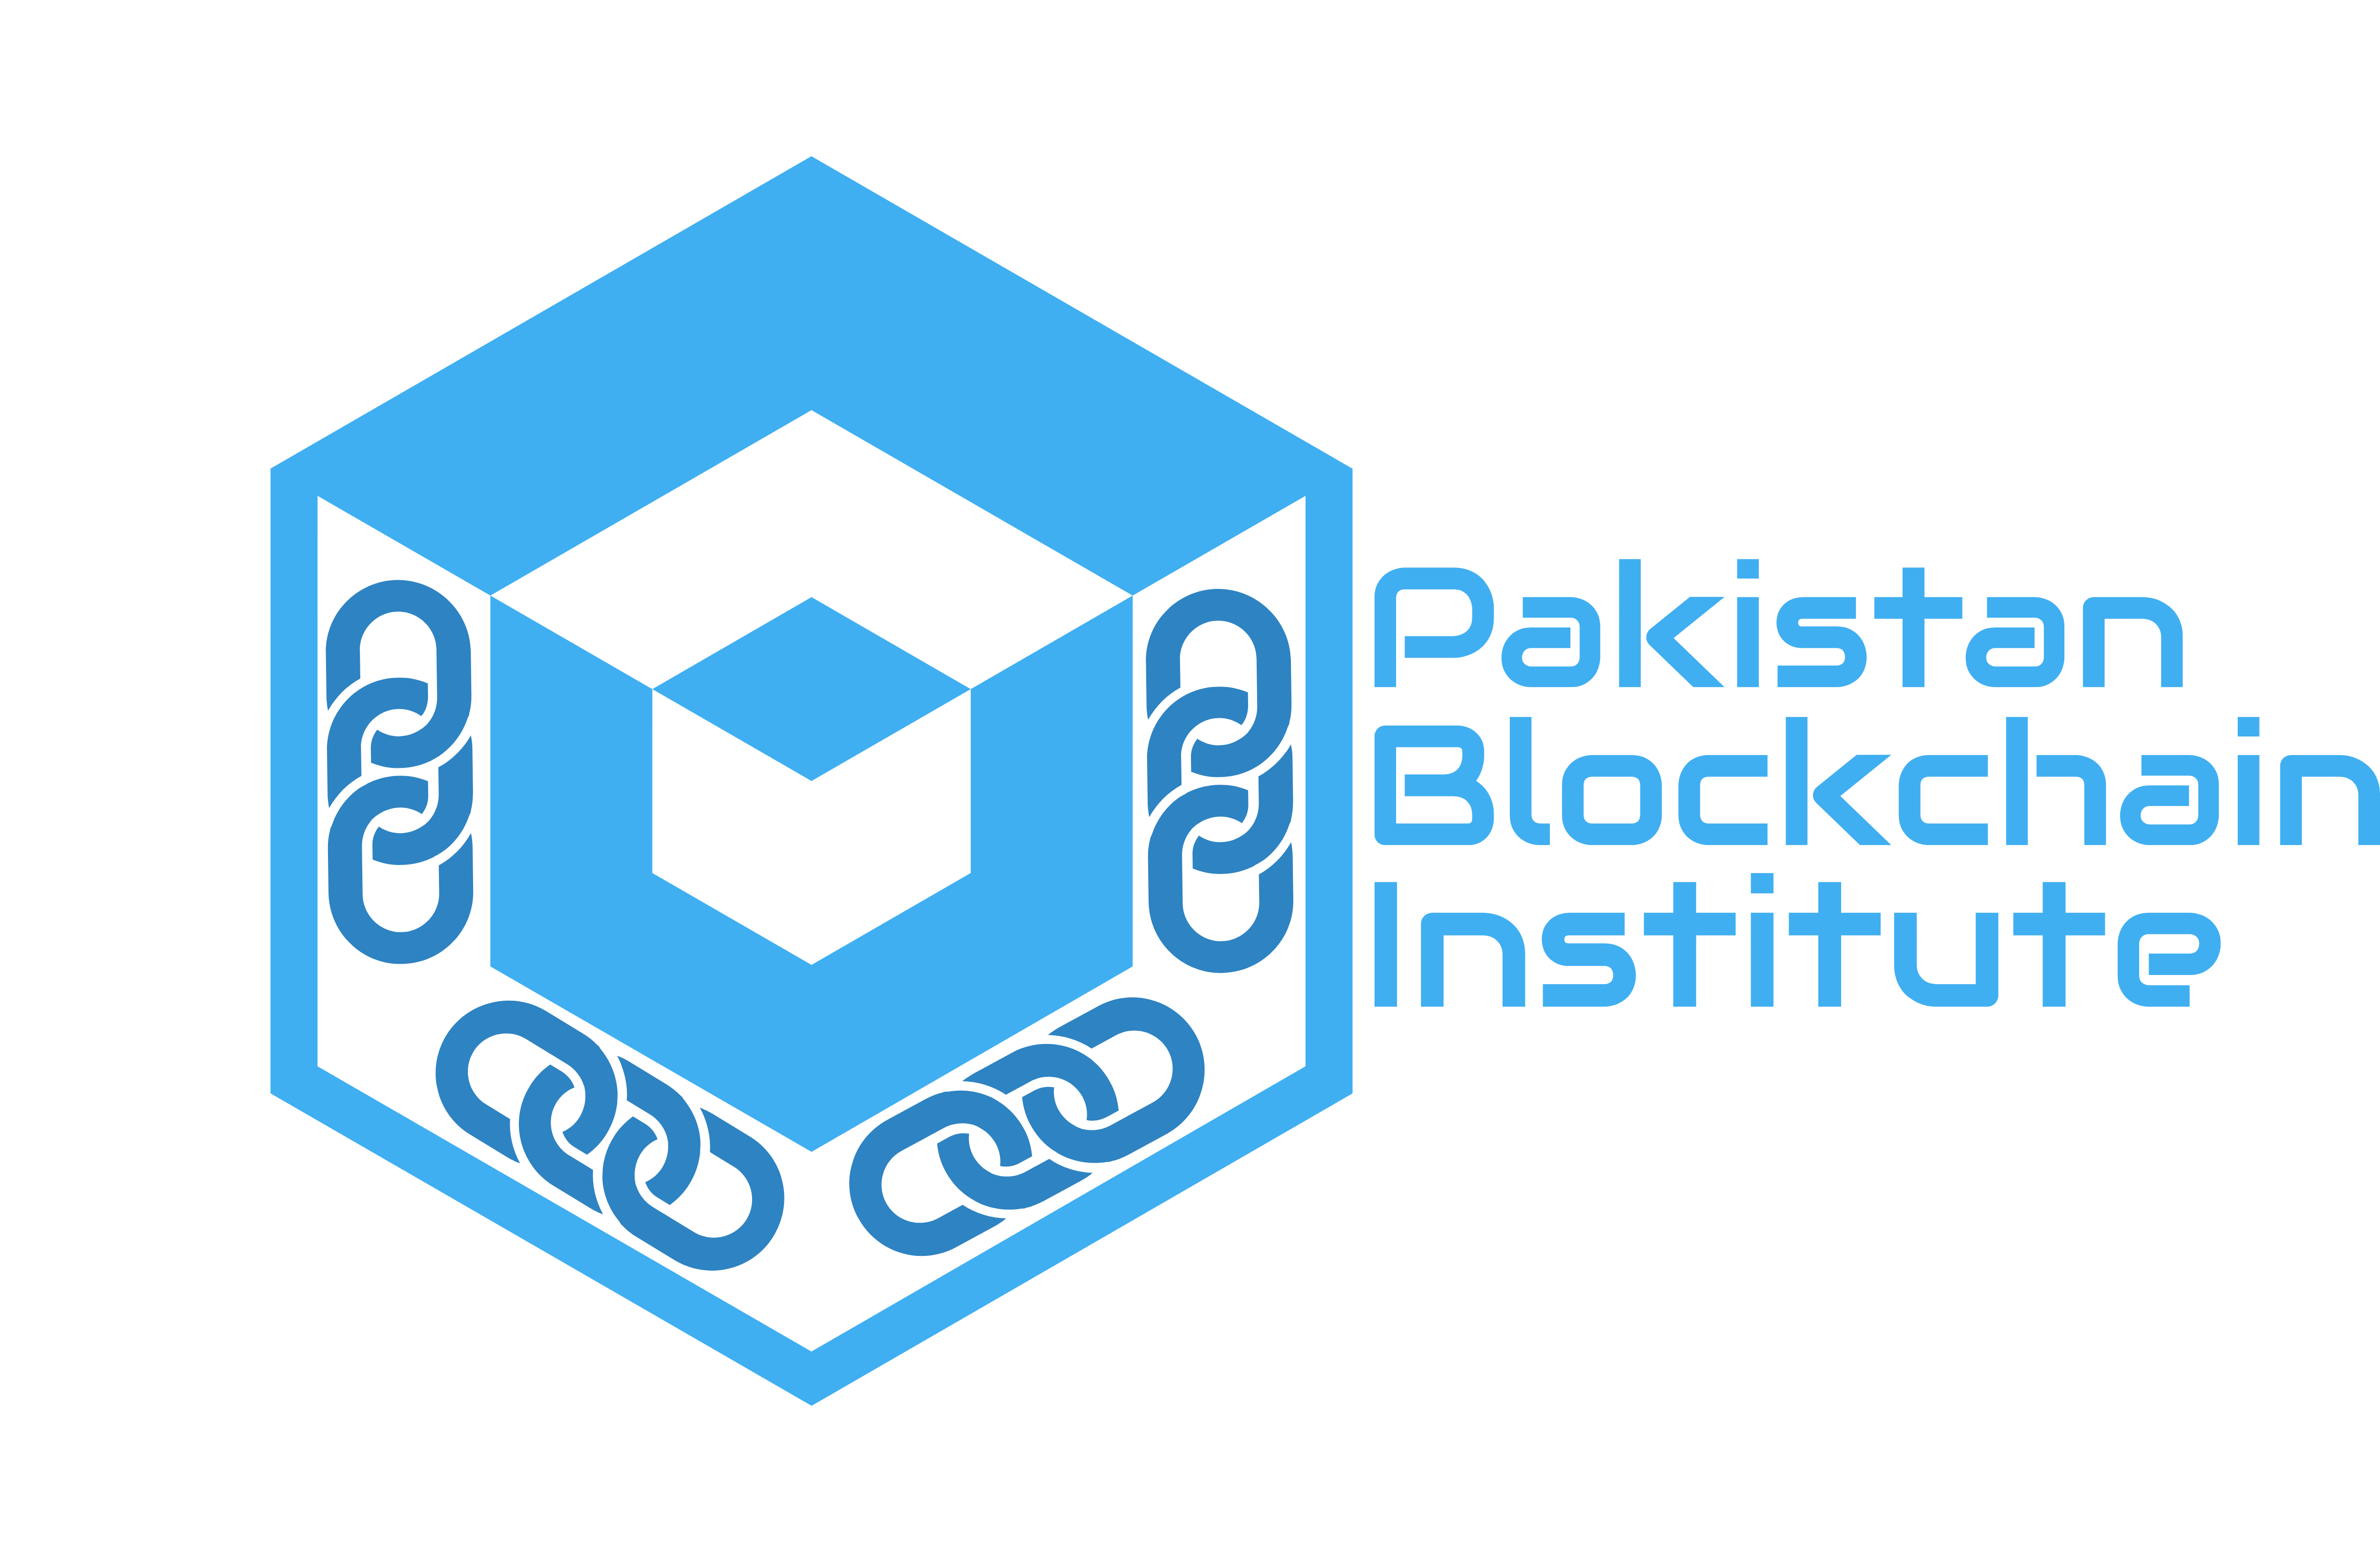 Pakistan Blockchain Institute